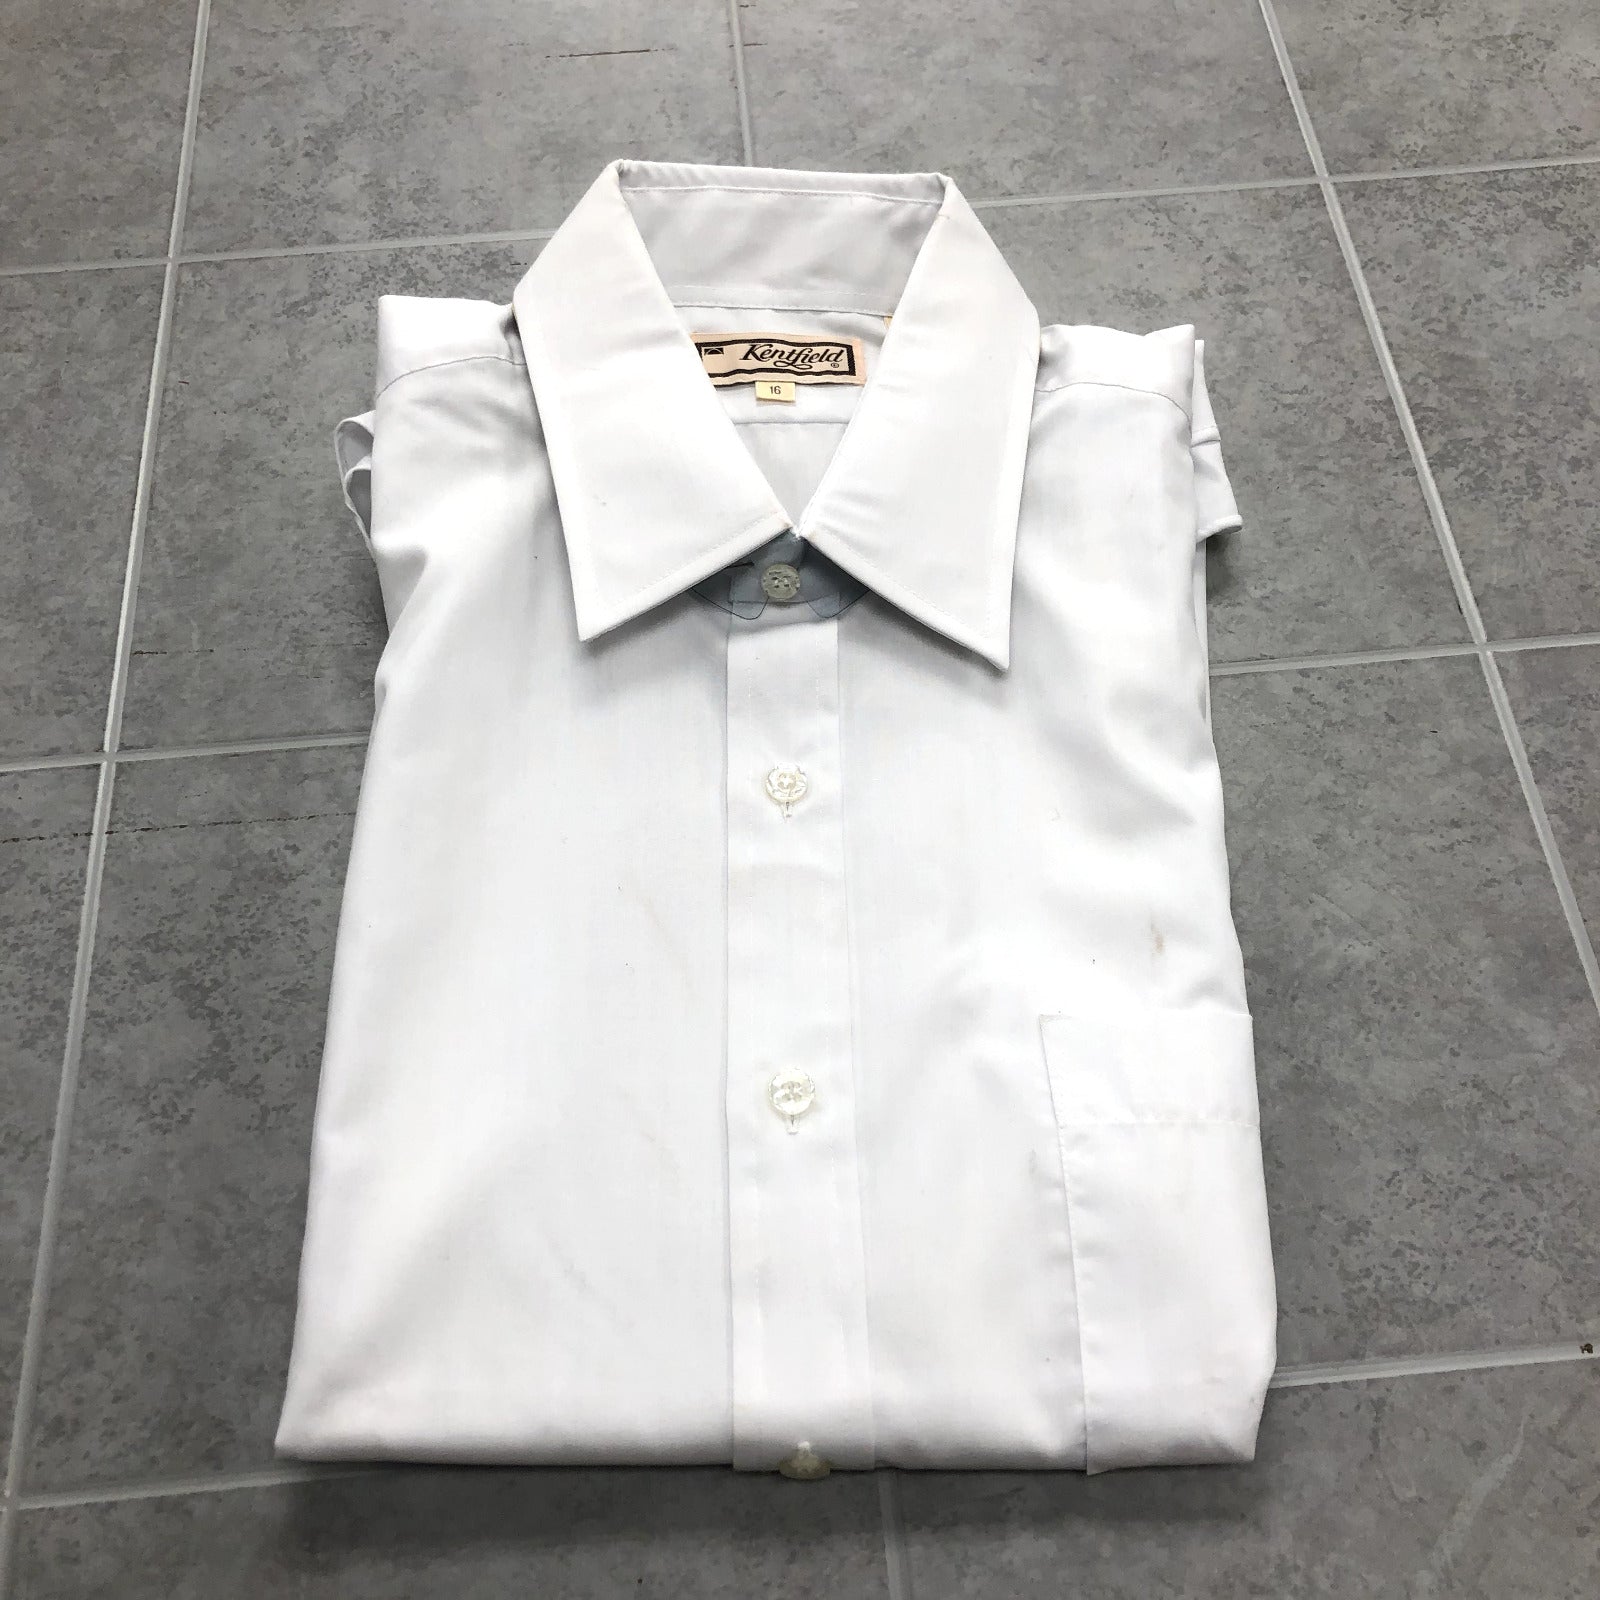 Vintage Kentfield White Short Sleeve Button Up Dress Shirt Adult Size 16